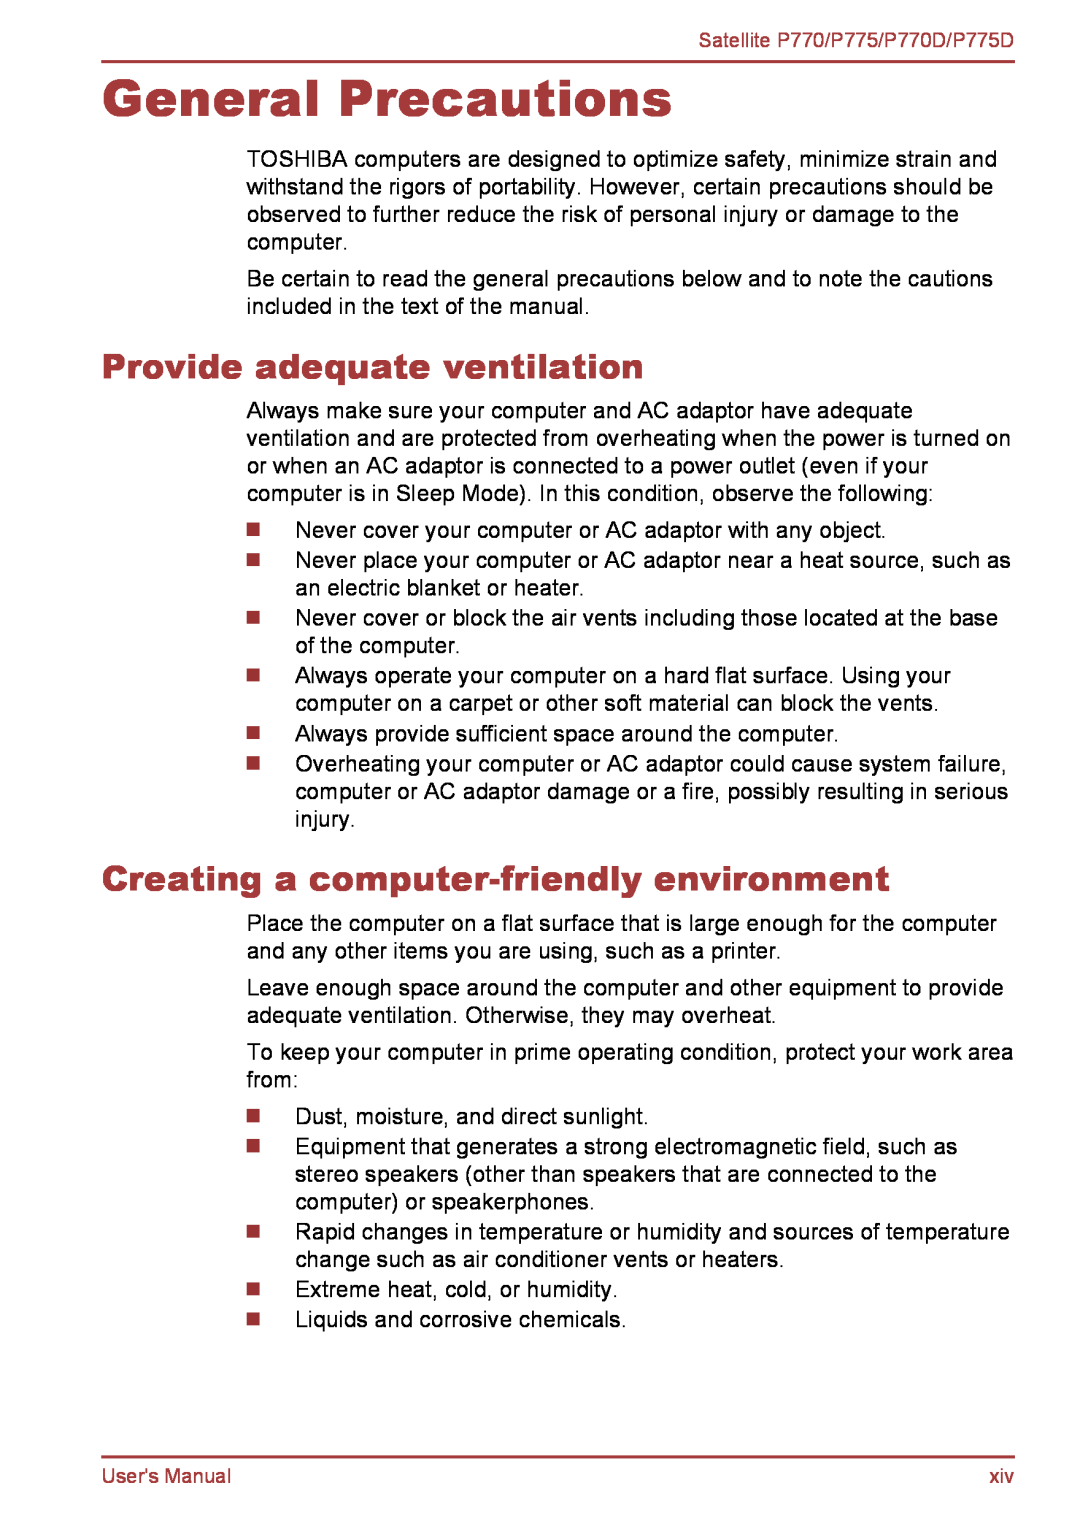 Toshiba P770 user manual General Precautions, Provide adequate ventilation, Creating a computer-friendly environment 